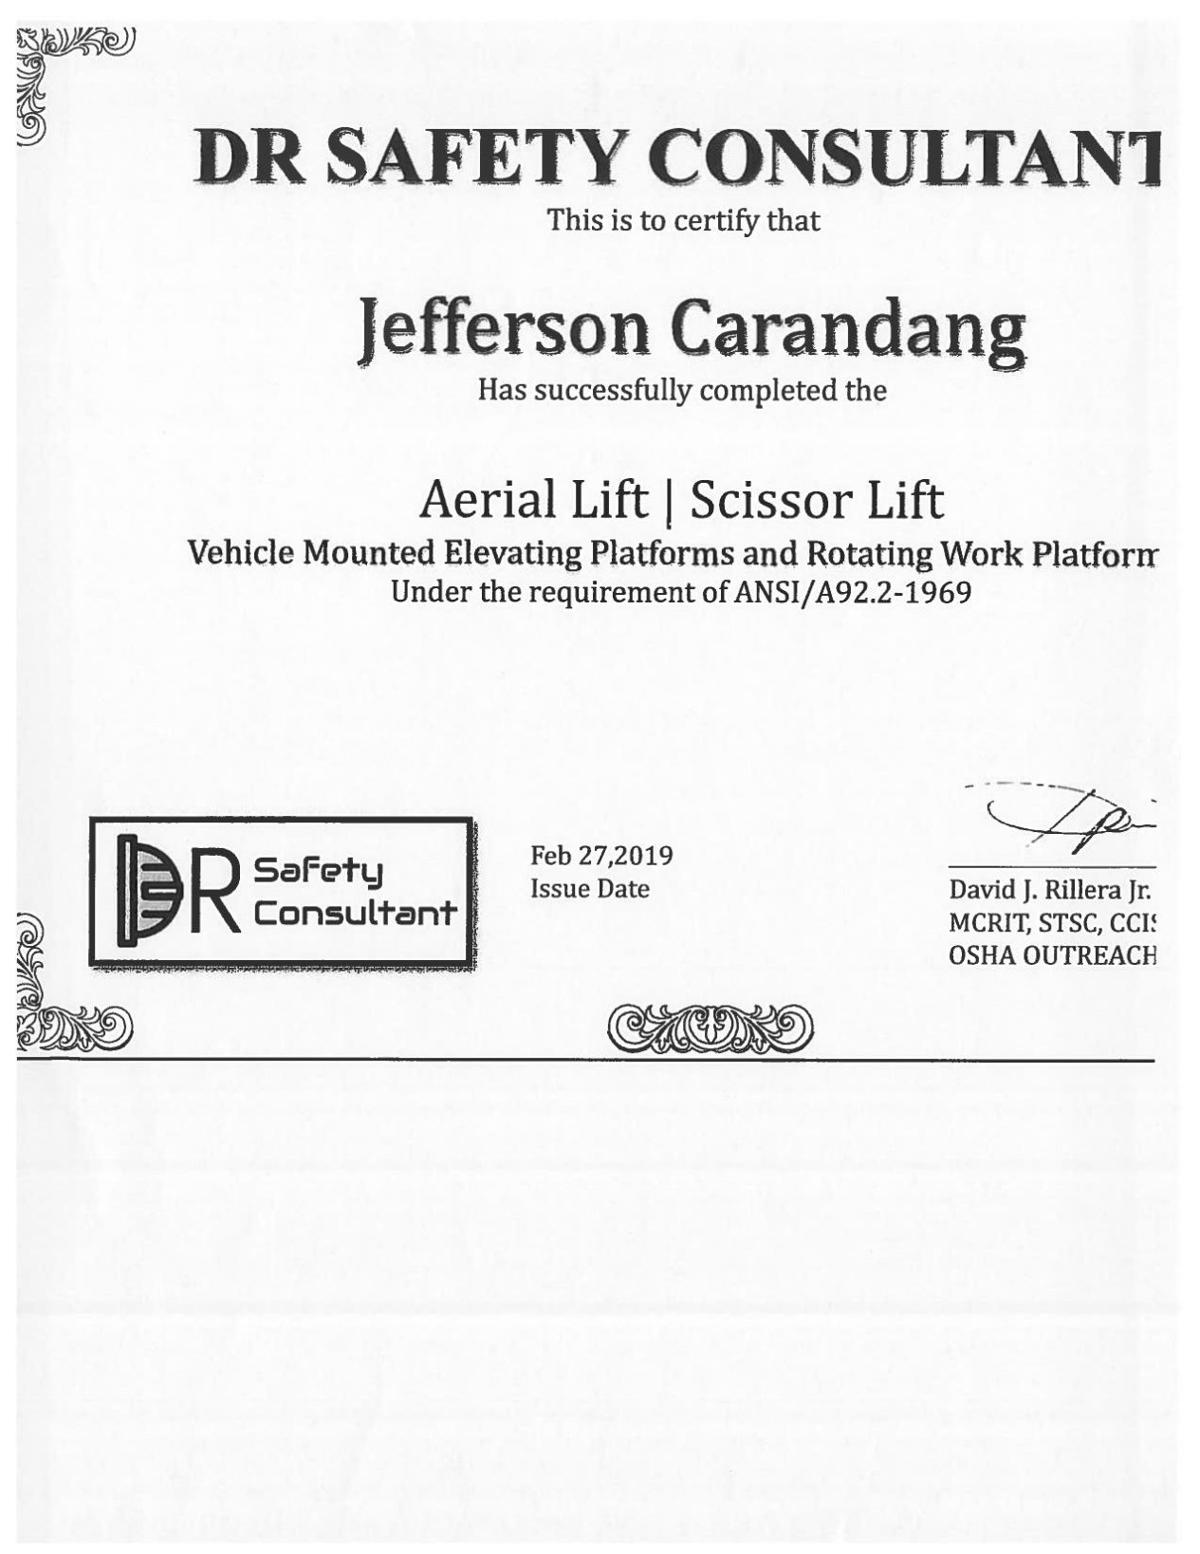 Aerial Lift Scissor Lift certification